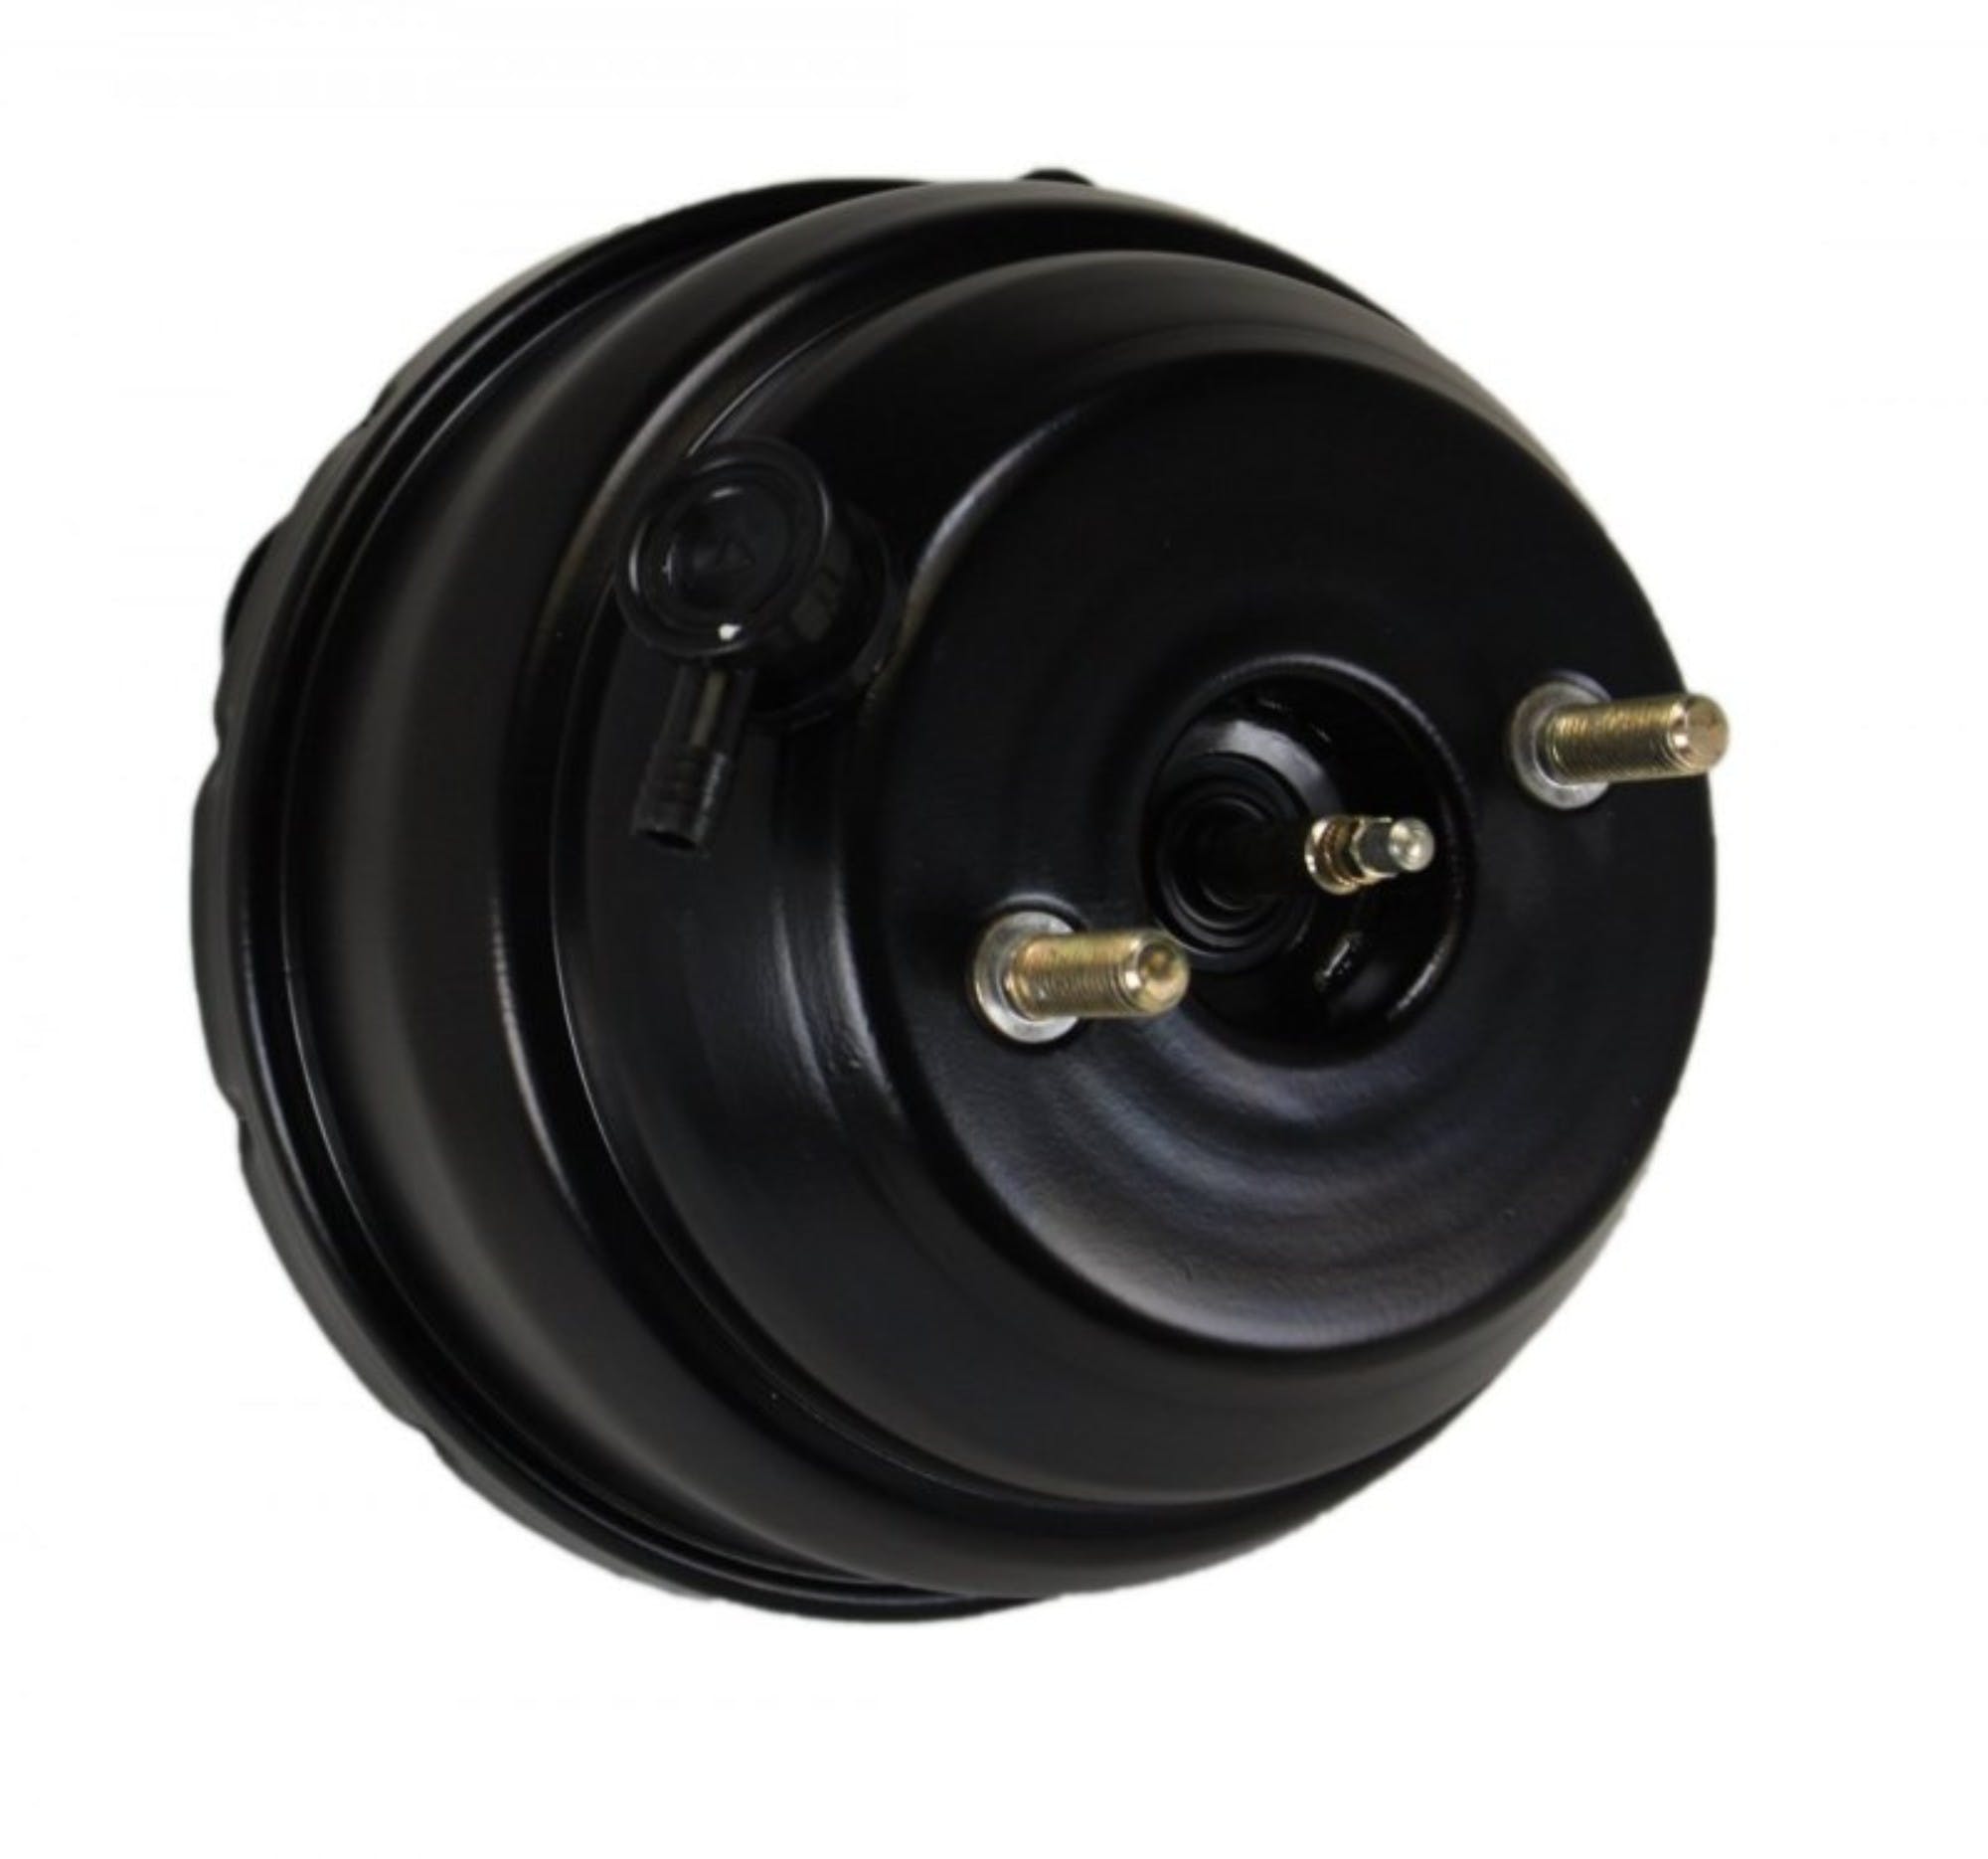 LEED Brakes PB0013 8 inch Dual Diaphragm Power Brake Booster - Black